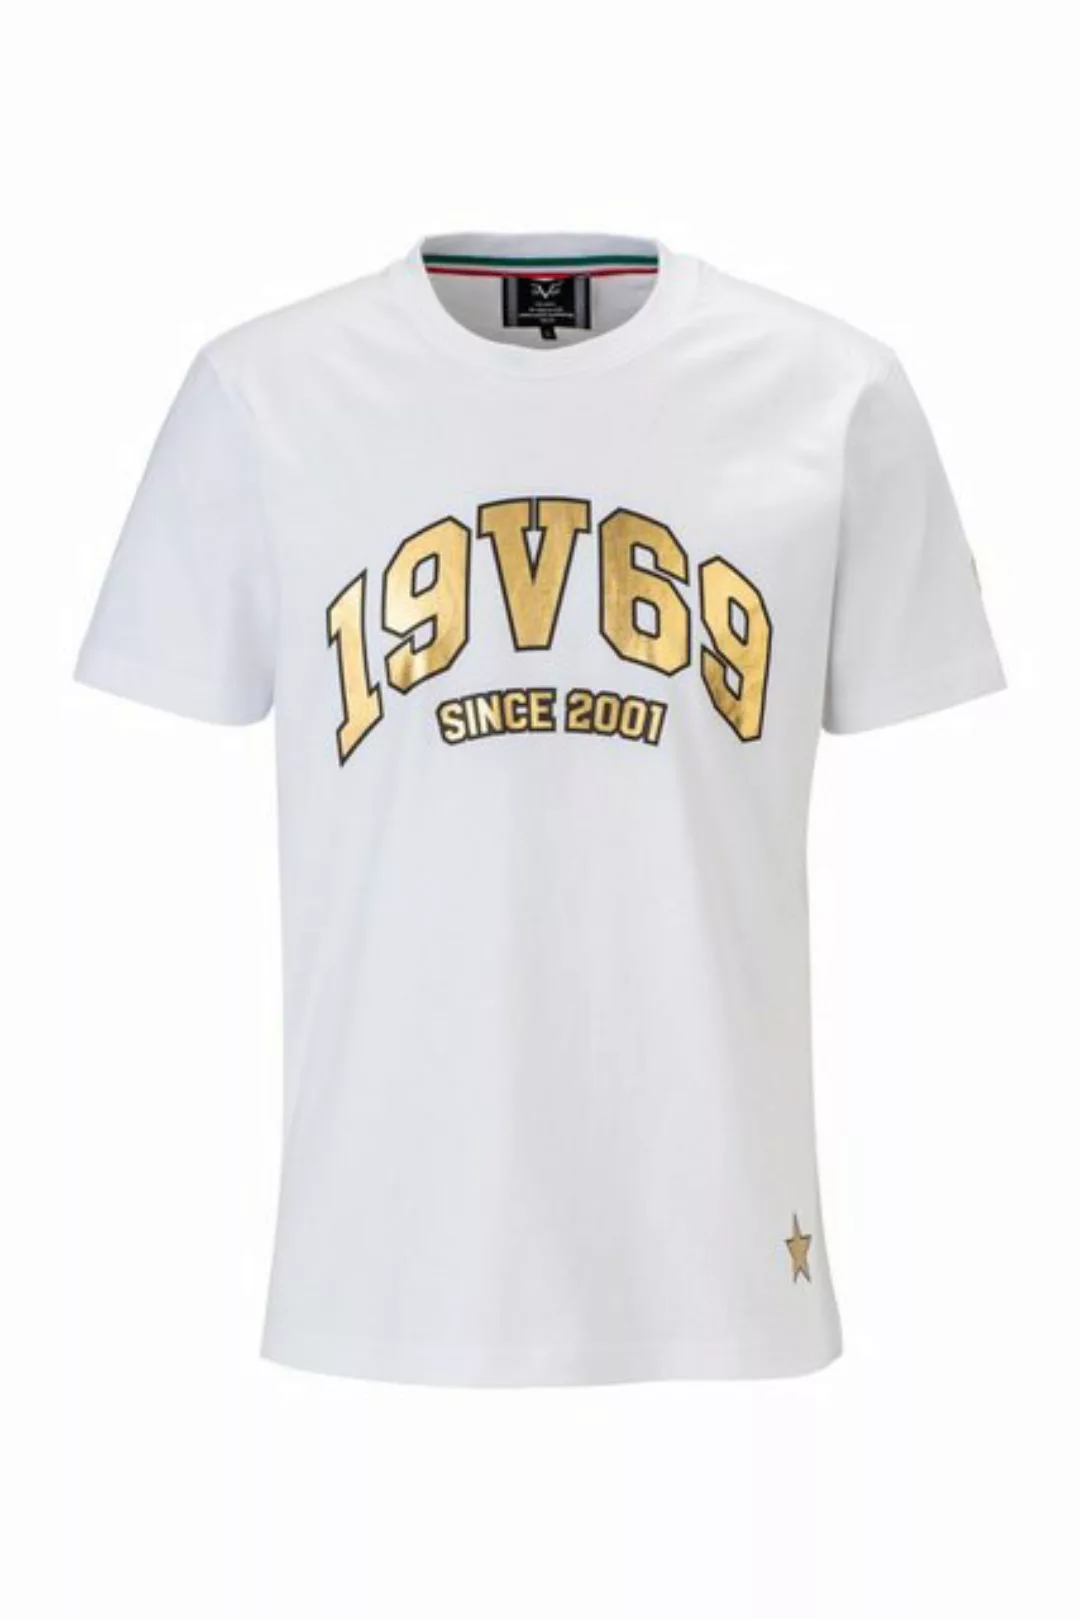 19V69 Italia by Versace T-Shirt TADEO günstig online kaufen